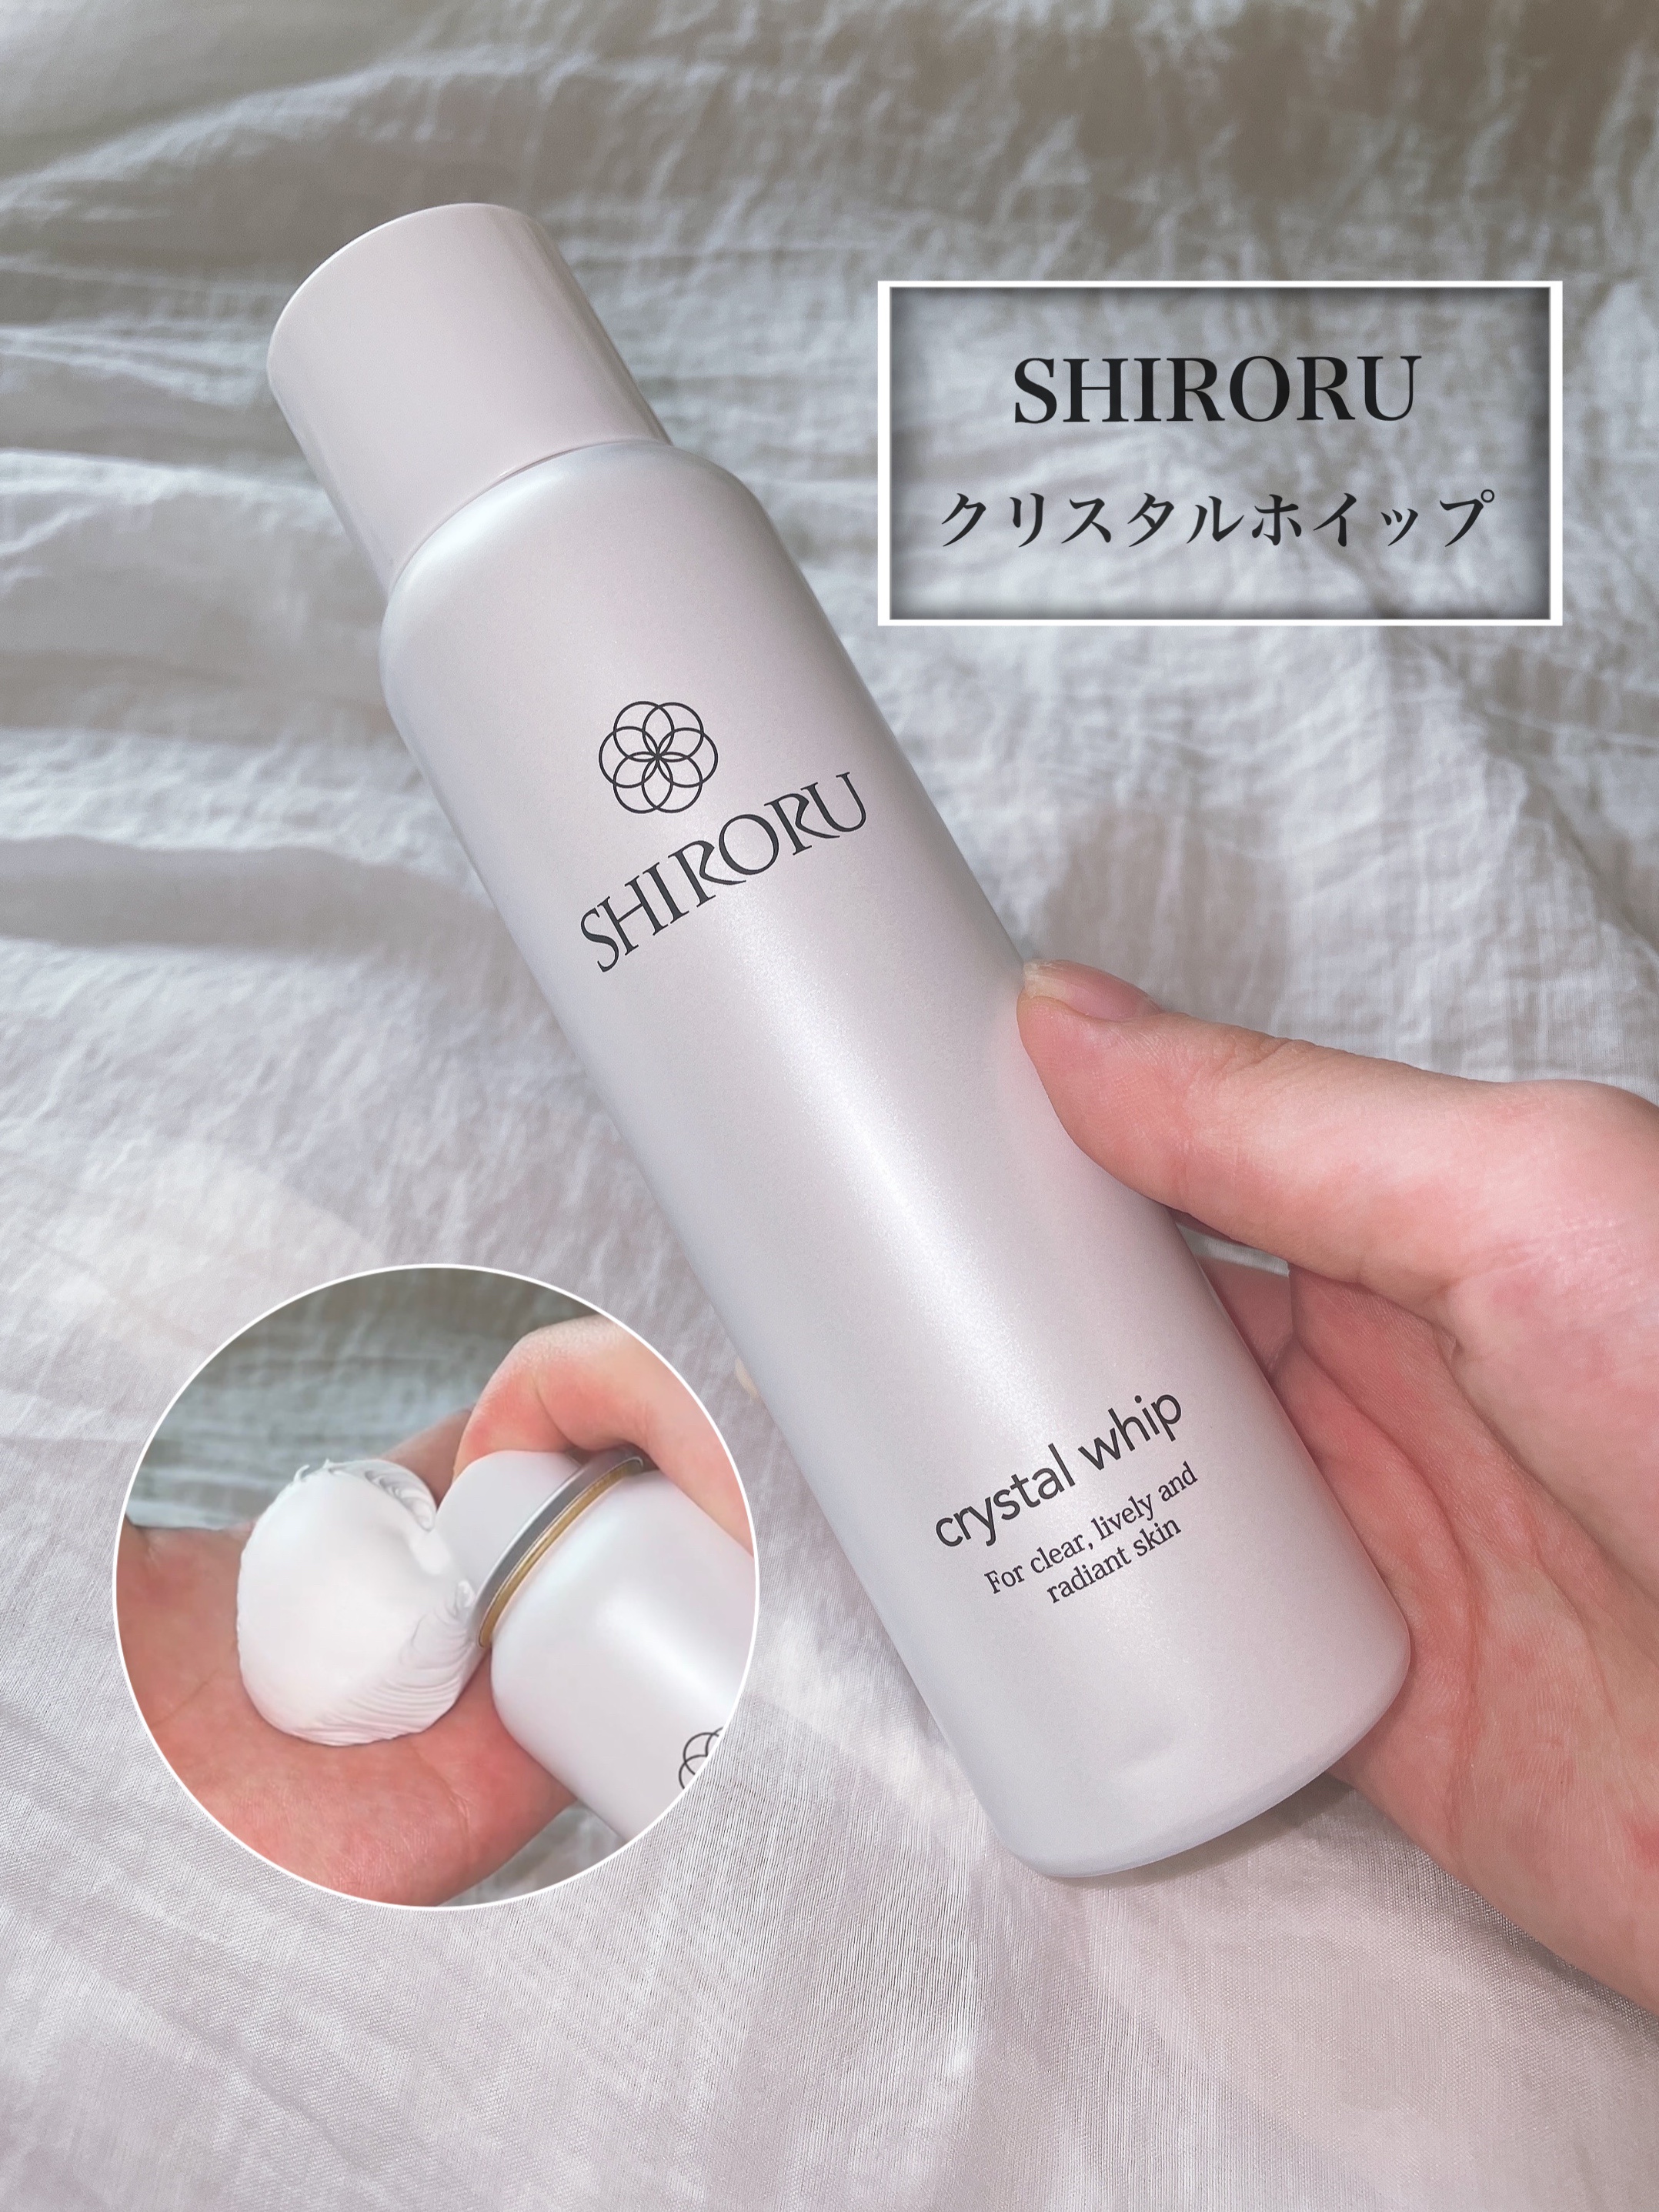 SHIRORU クリスタルホイップ - 基礎化粧品